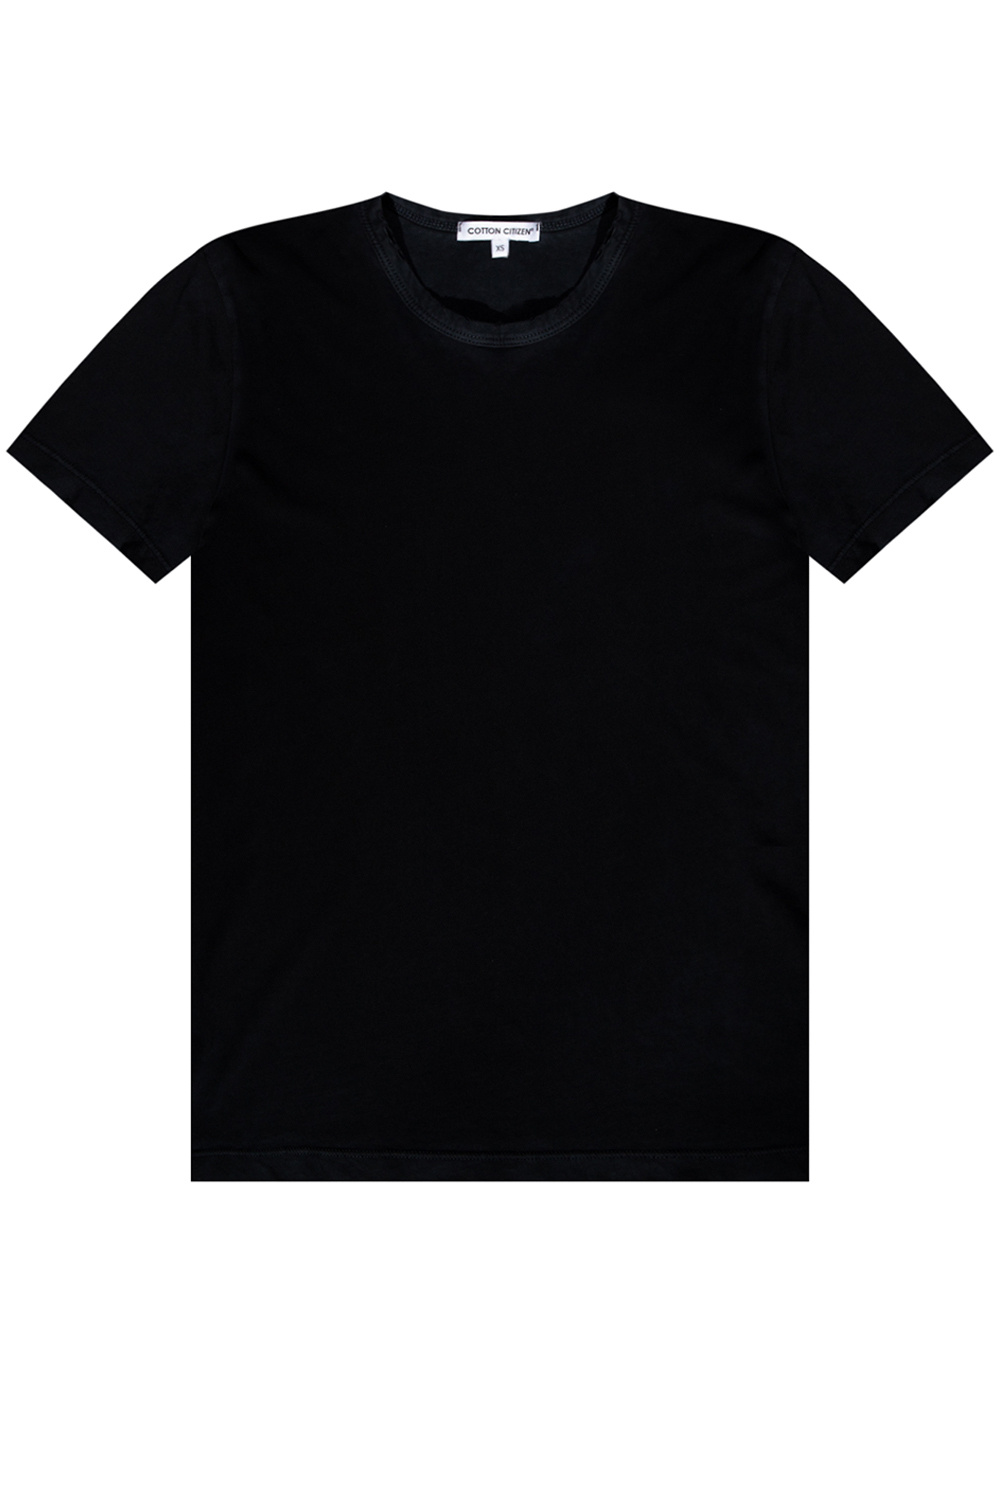 Cotton Citizen T-shirt with worn effect